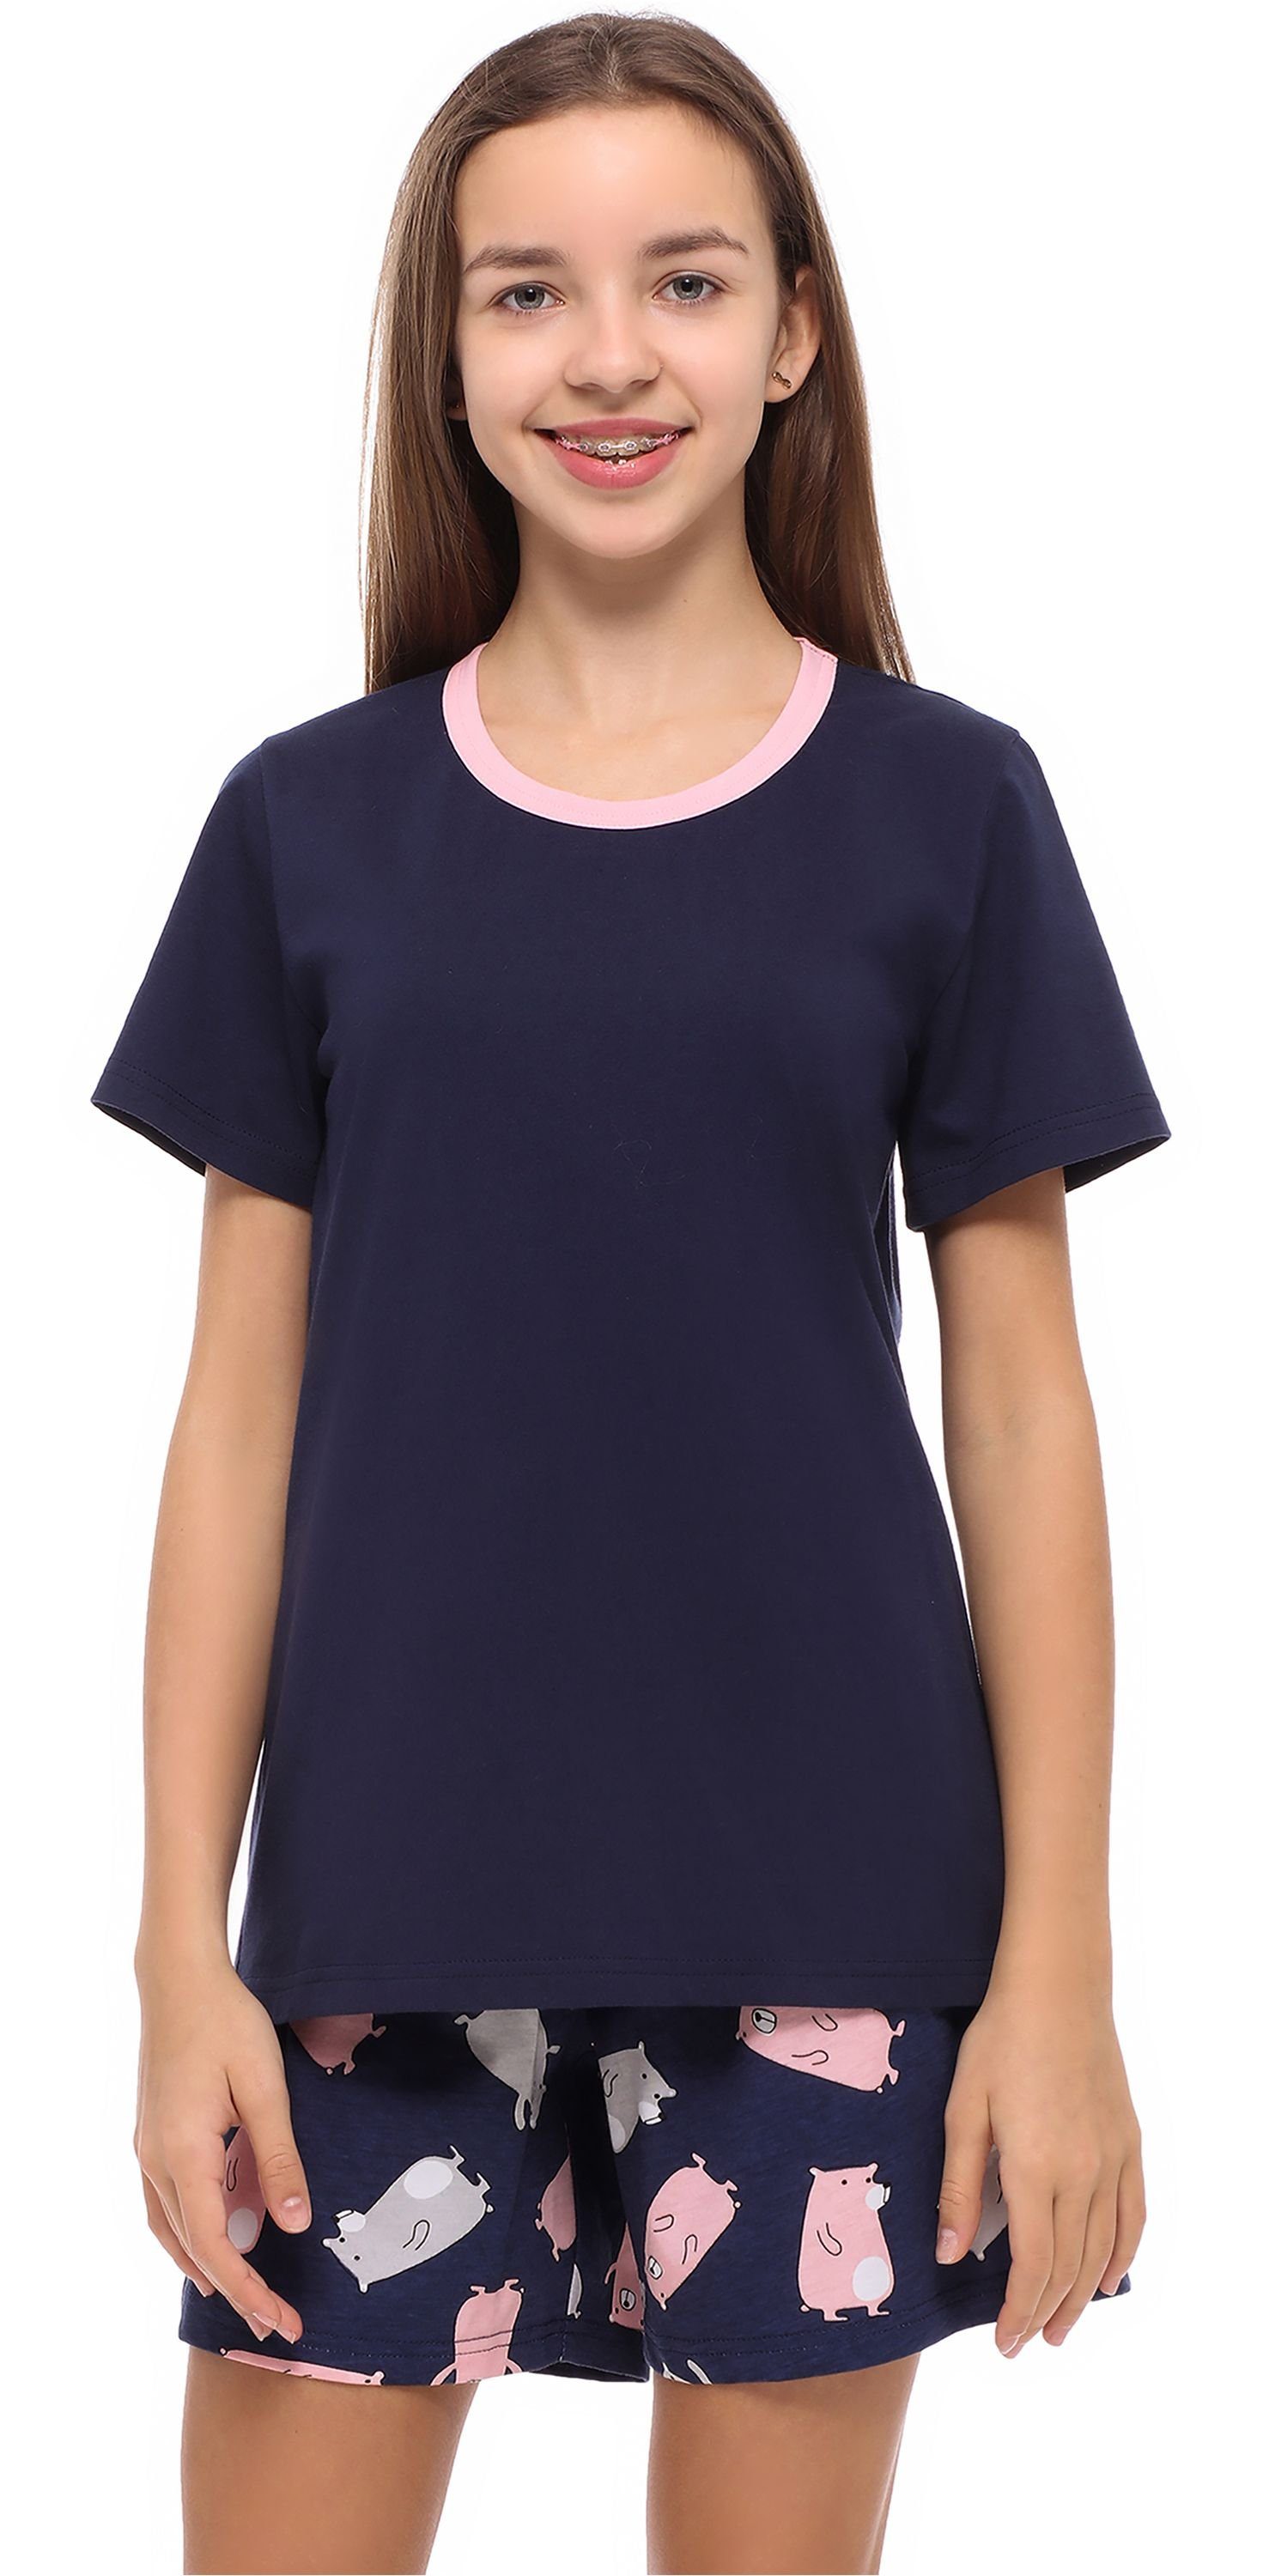 Jugend Style Marineblau/Teddybär MS10-239 Mädchen Schlafanzug Merry Schlafanzug